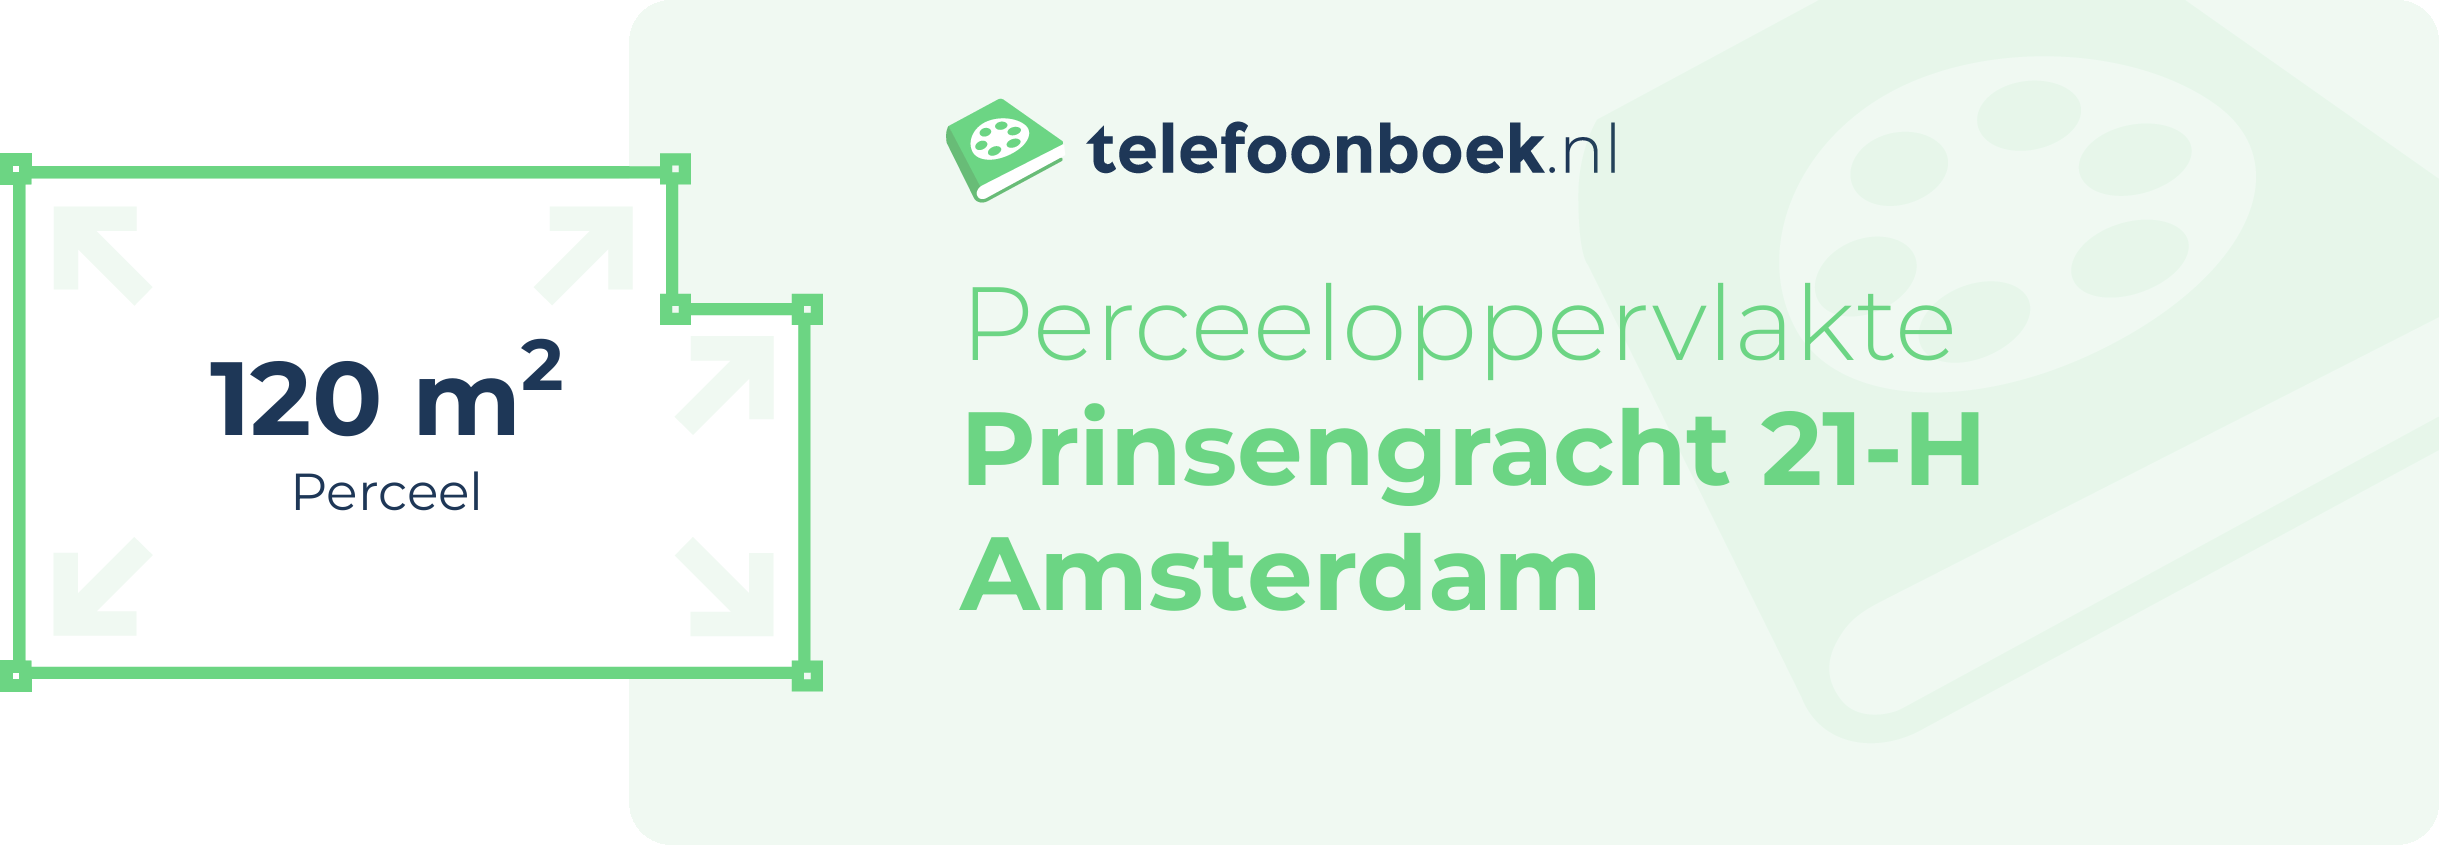 Perceeloppervlakte Prinsengracht 21-H Amsterdam